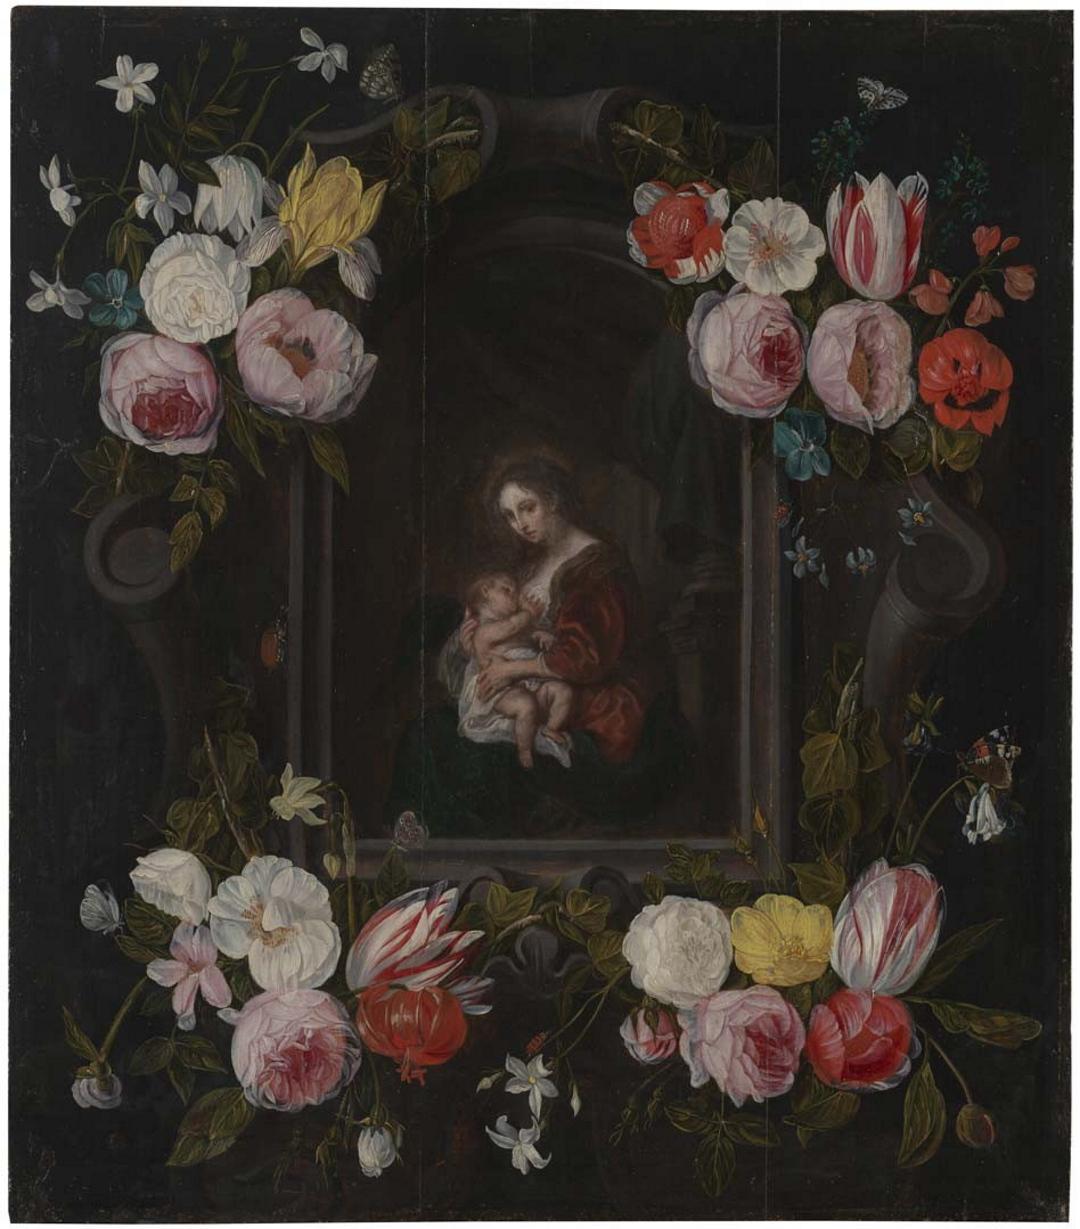 Slider: Raking light, Madonna and Child encircled by roses c.1650s